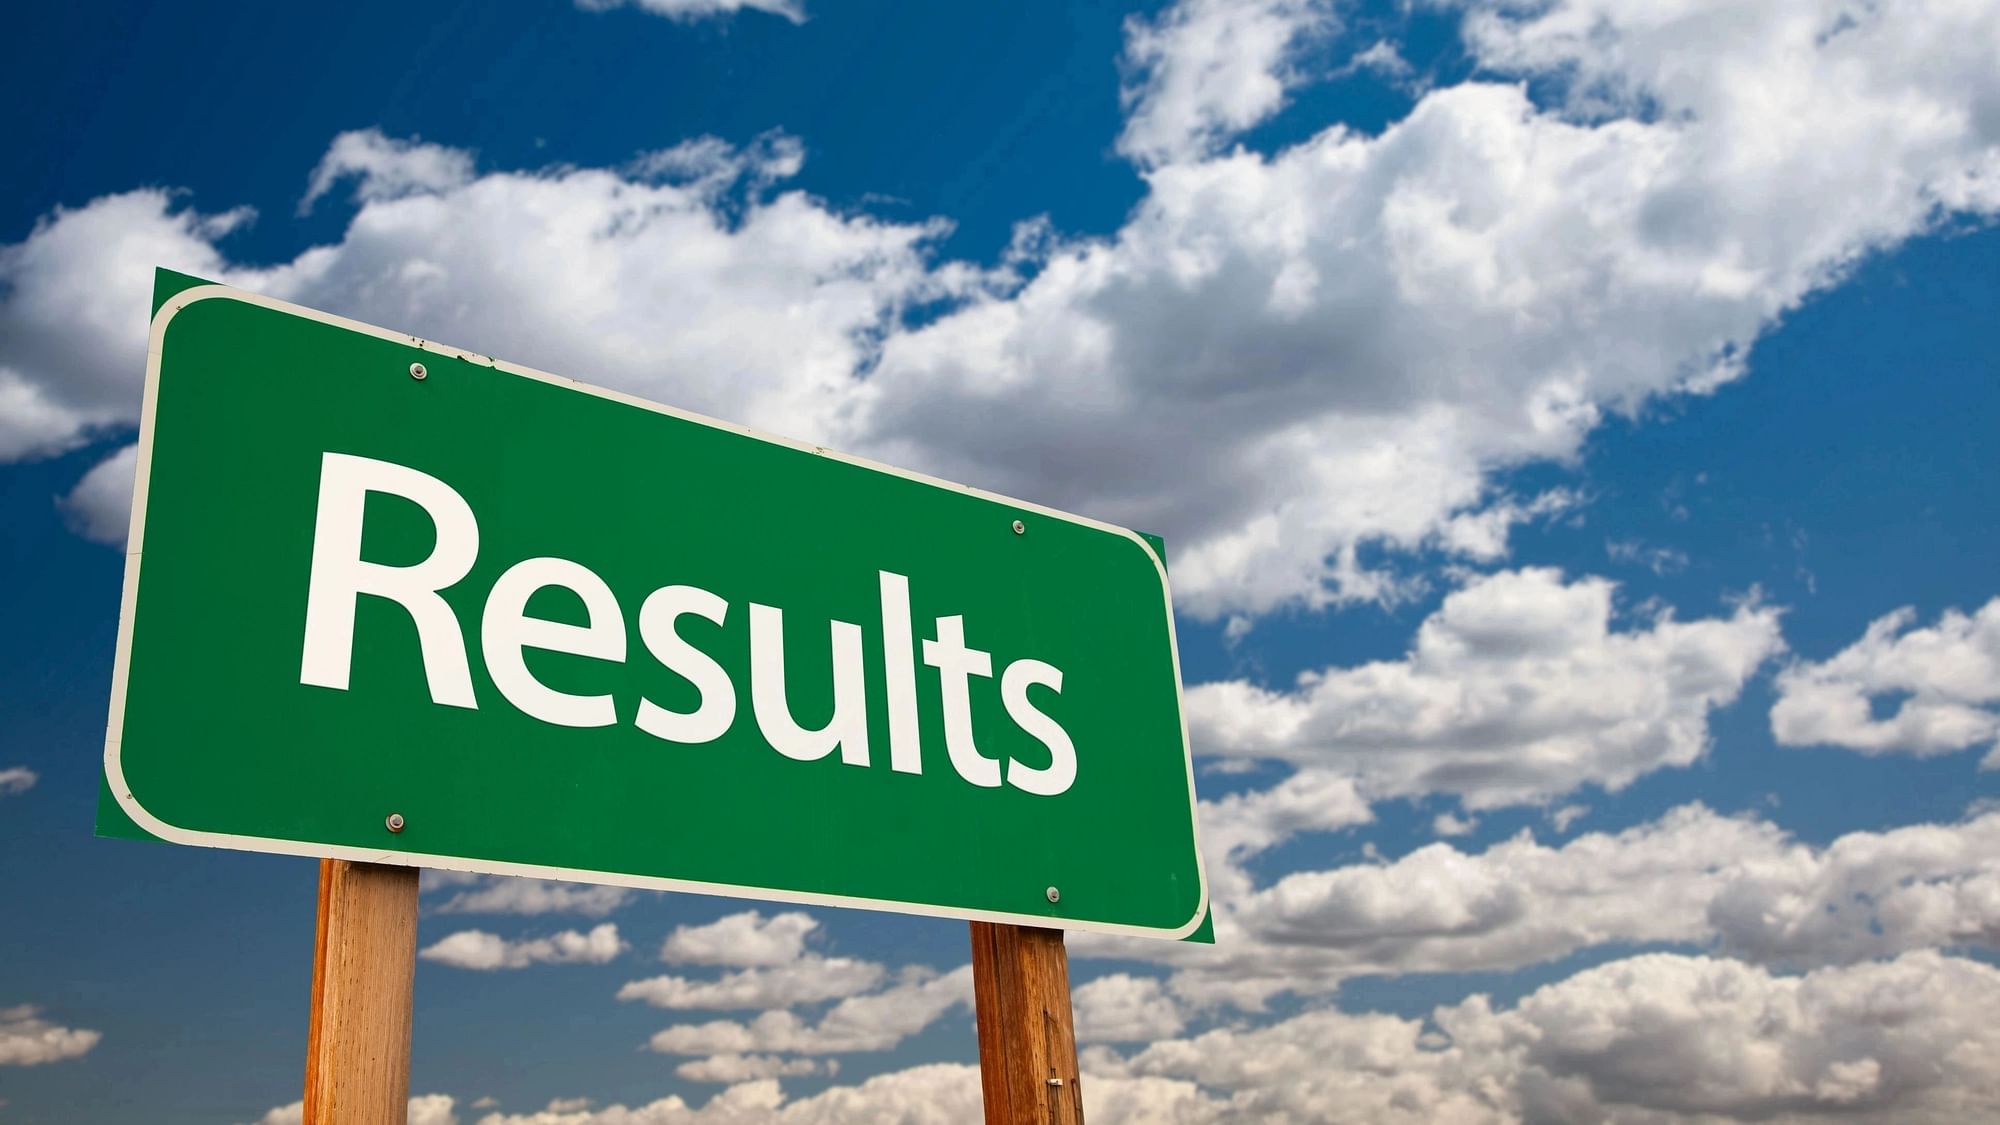 PSEB 10th Results 2022 LIVE Updates: Punjab board class 10th Term